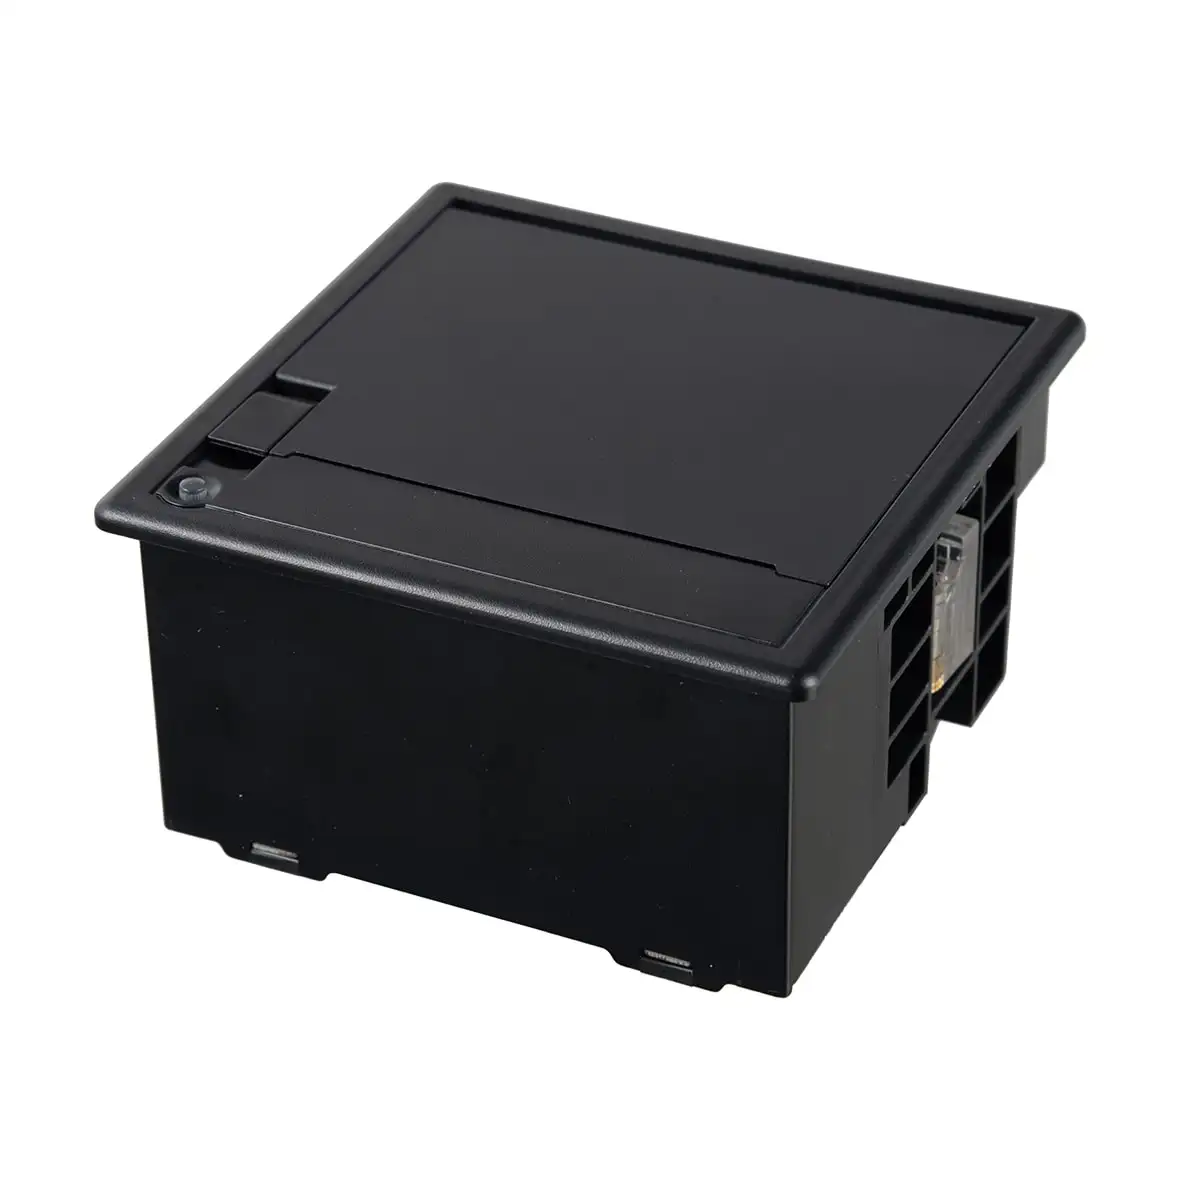 CSN-A5 58mm Micro Panel Mount Drucker tragbare eingebettete Thermo drucker w ttl RS232 USB-Schnitts telle